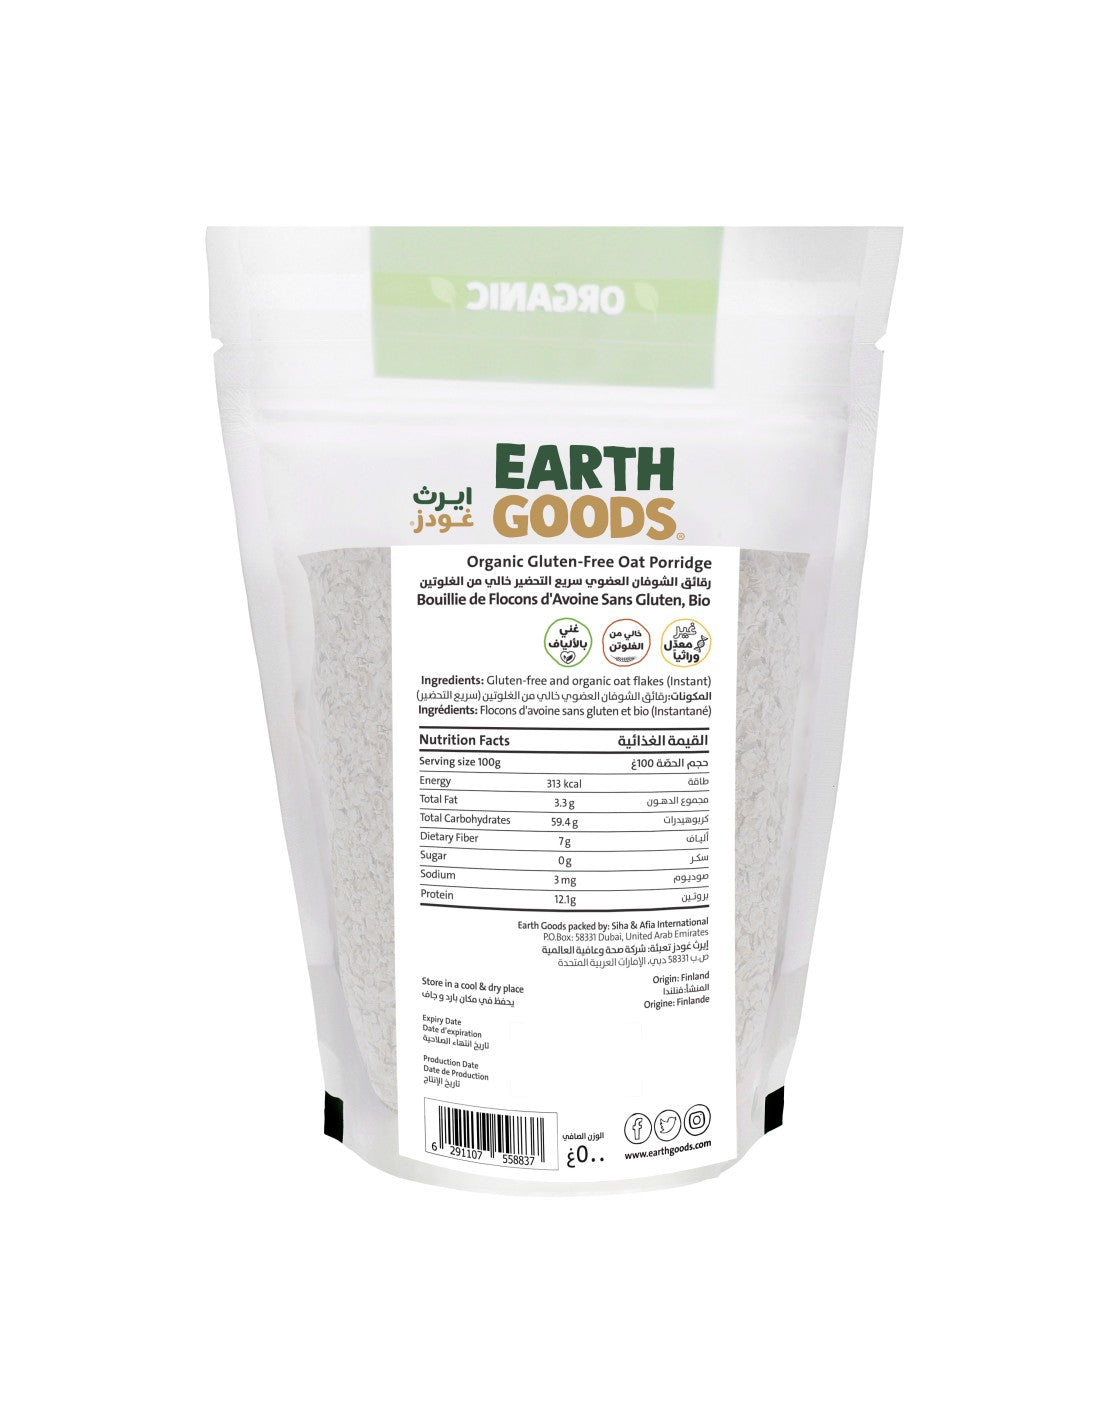 EARTH GOODS Organic Gluten Free Oat Porridge, 500g - Vegan, Non-GMO